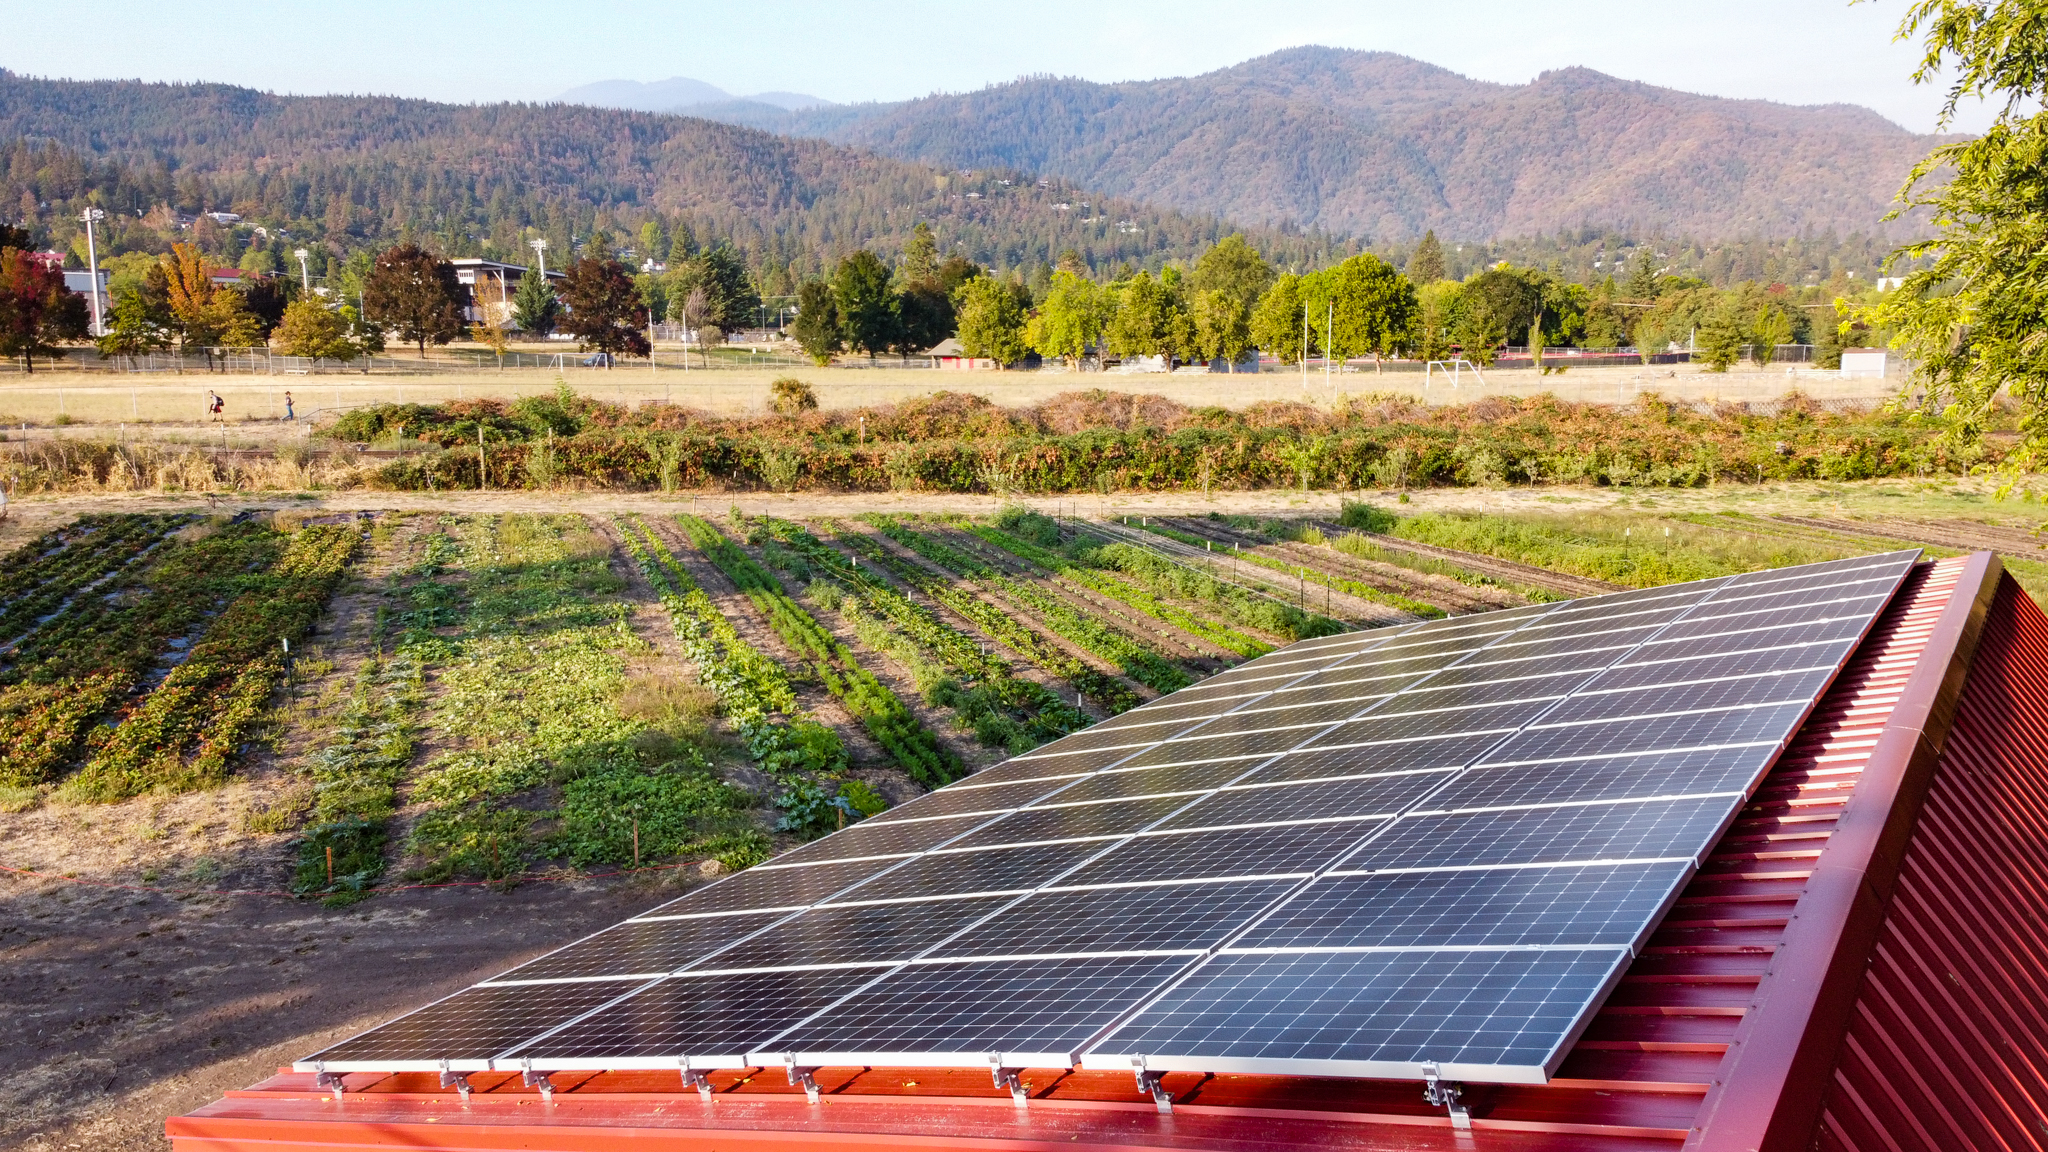 SOU Farm with solar panels